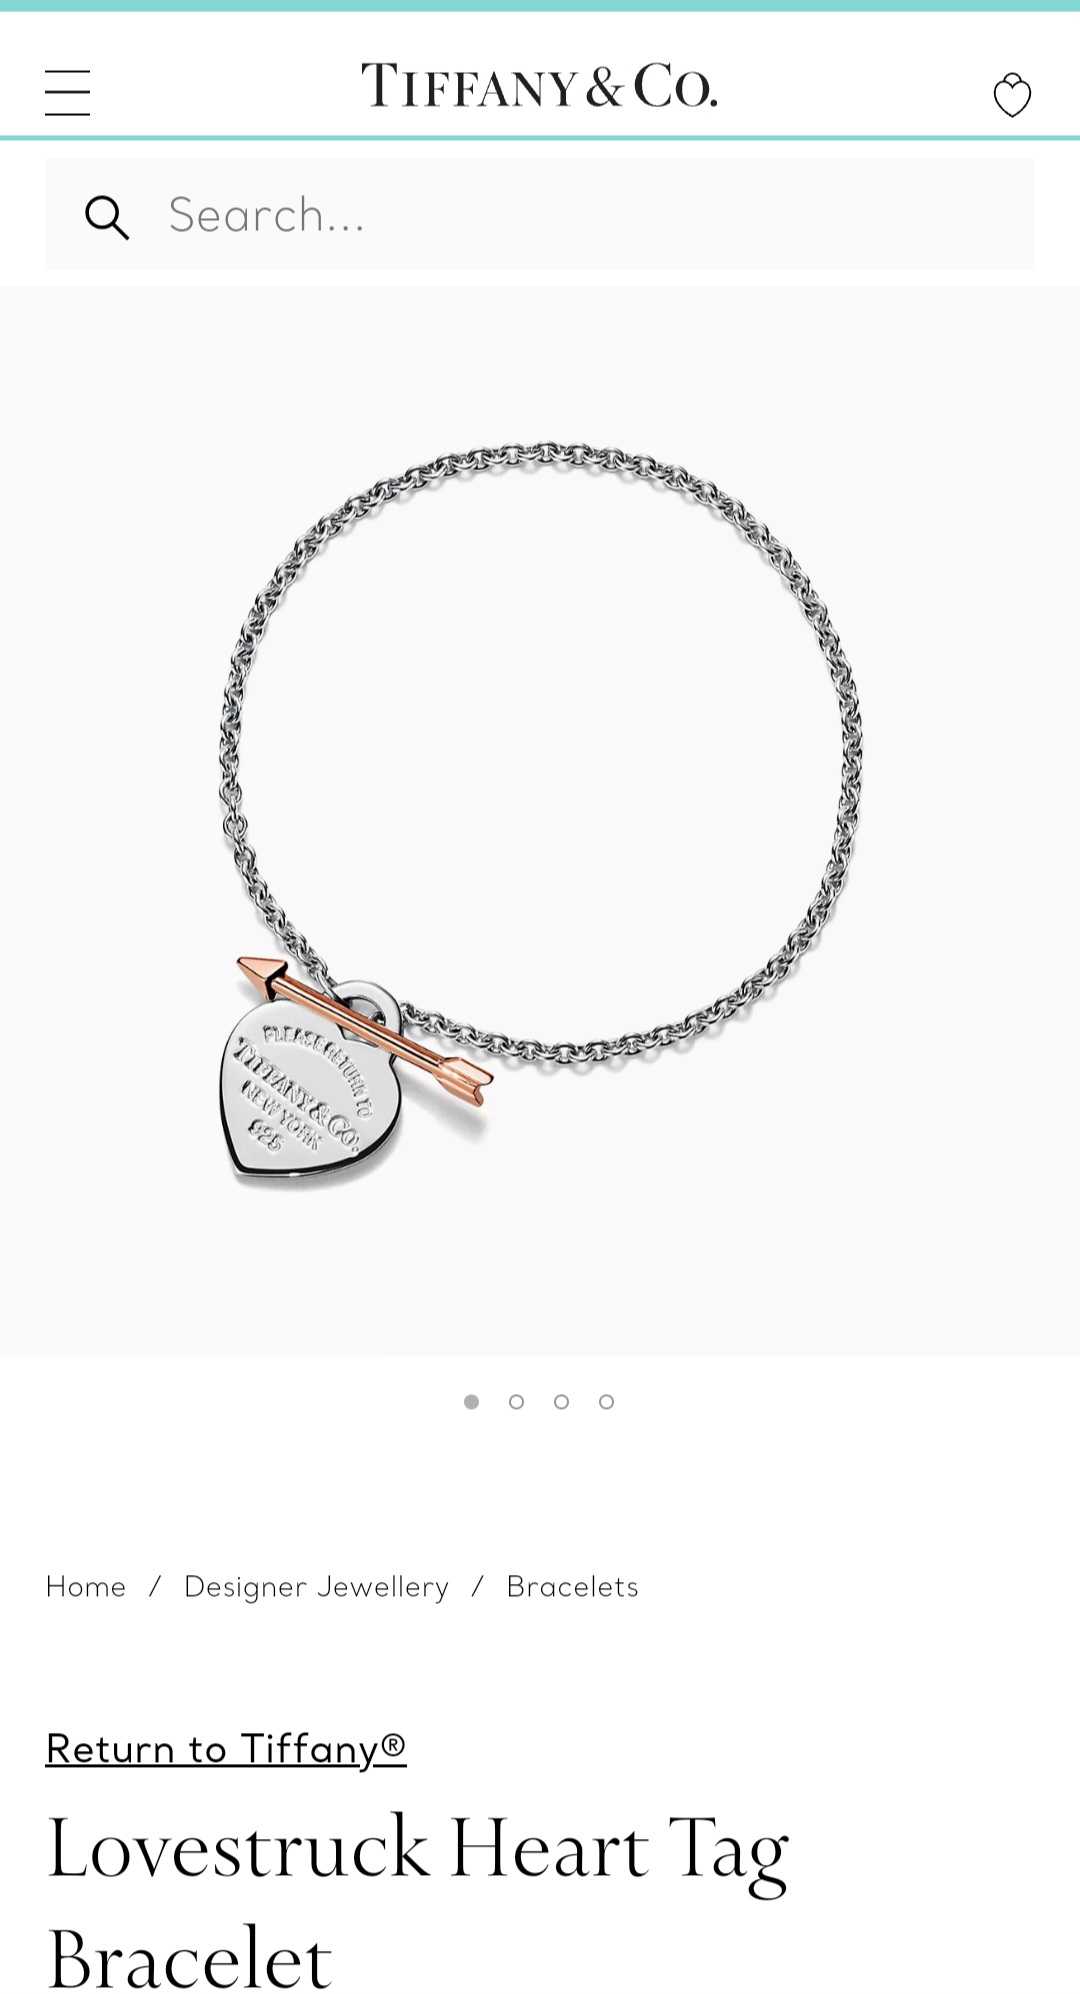 Return to Tiffany & co Lovestruck heart tag bracelet